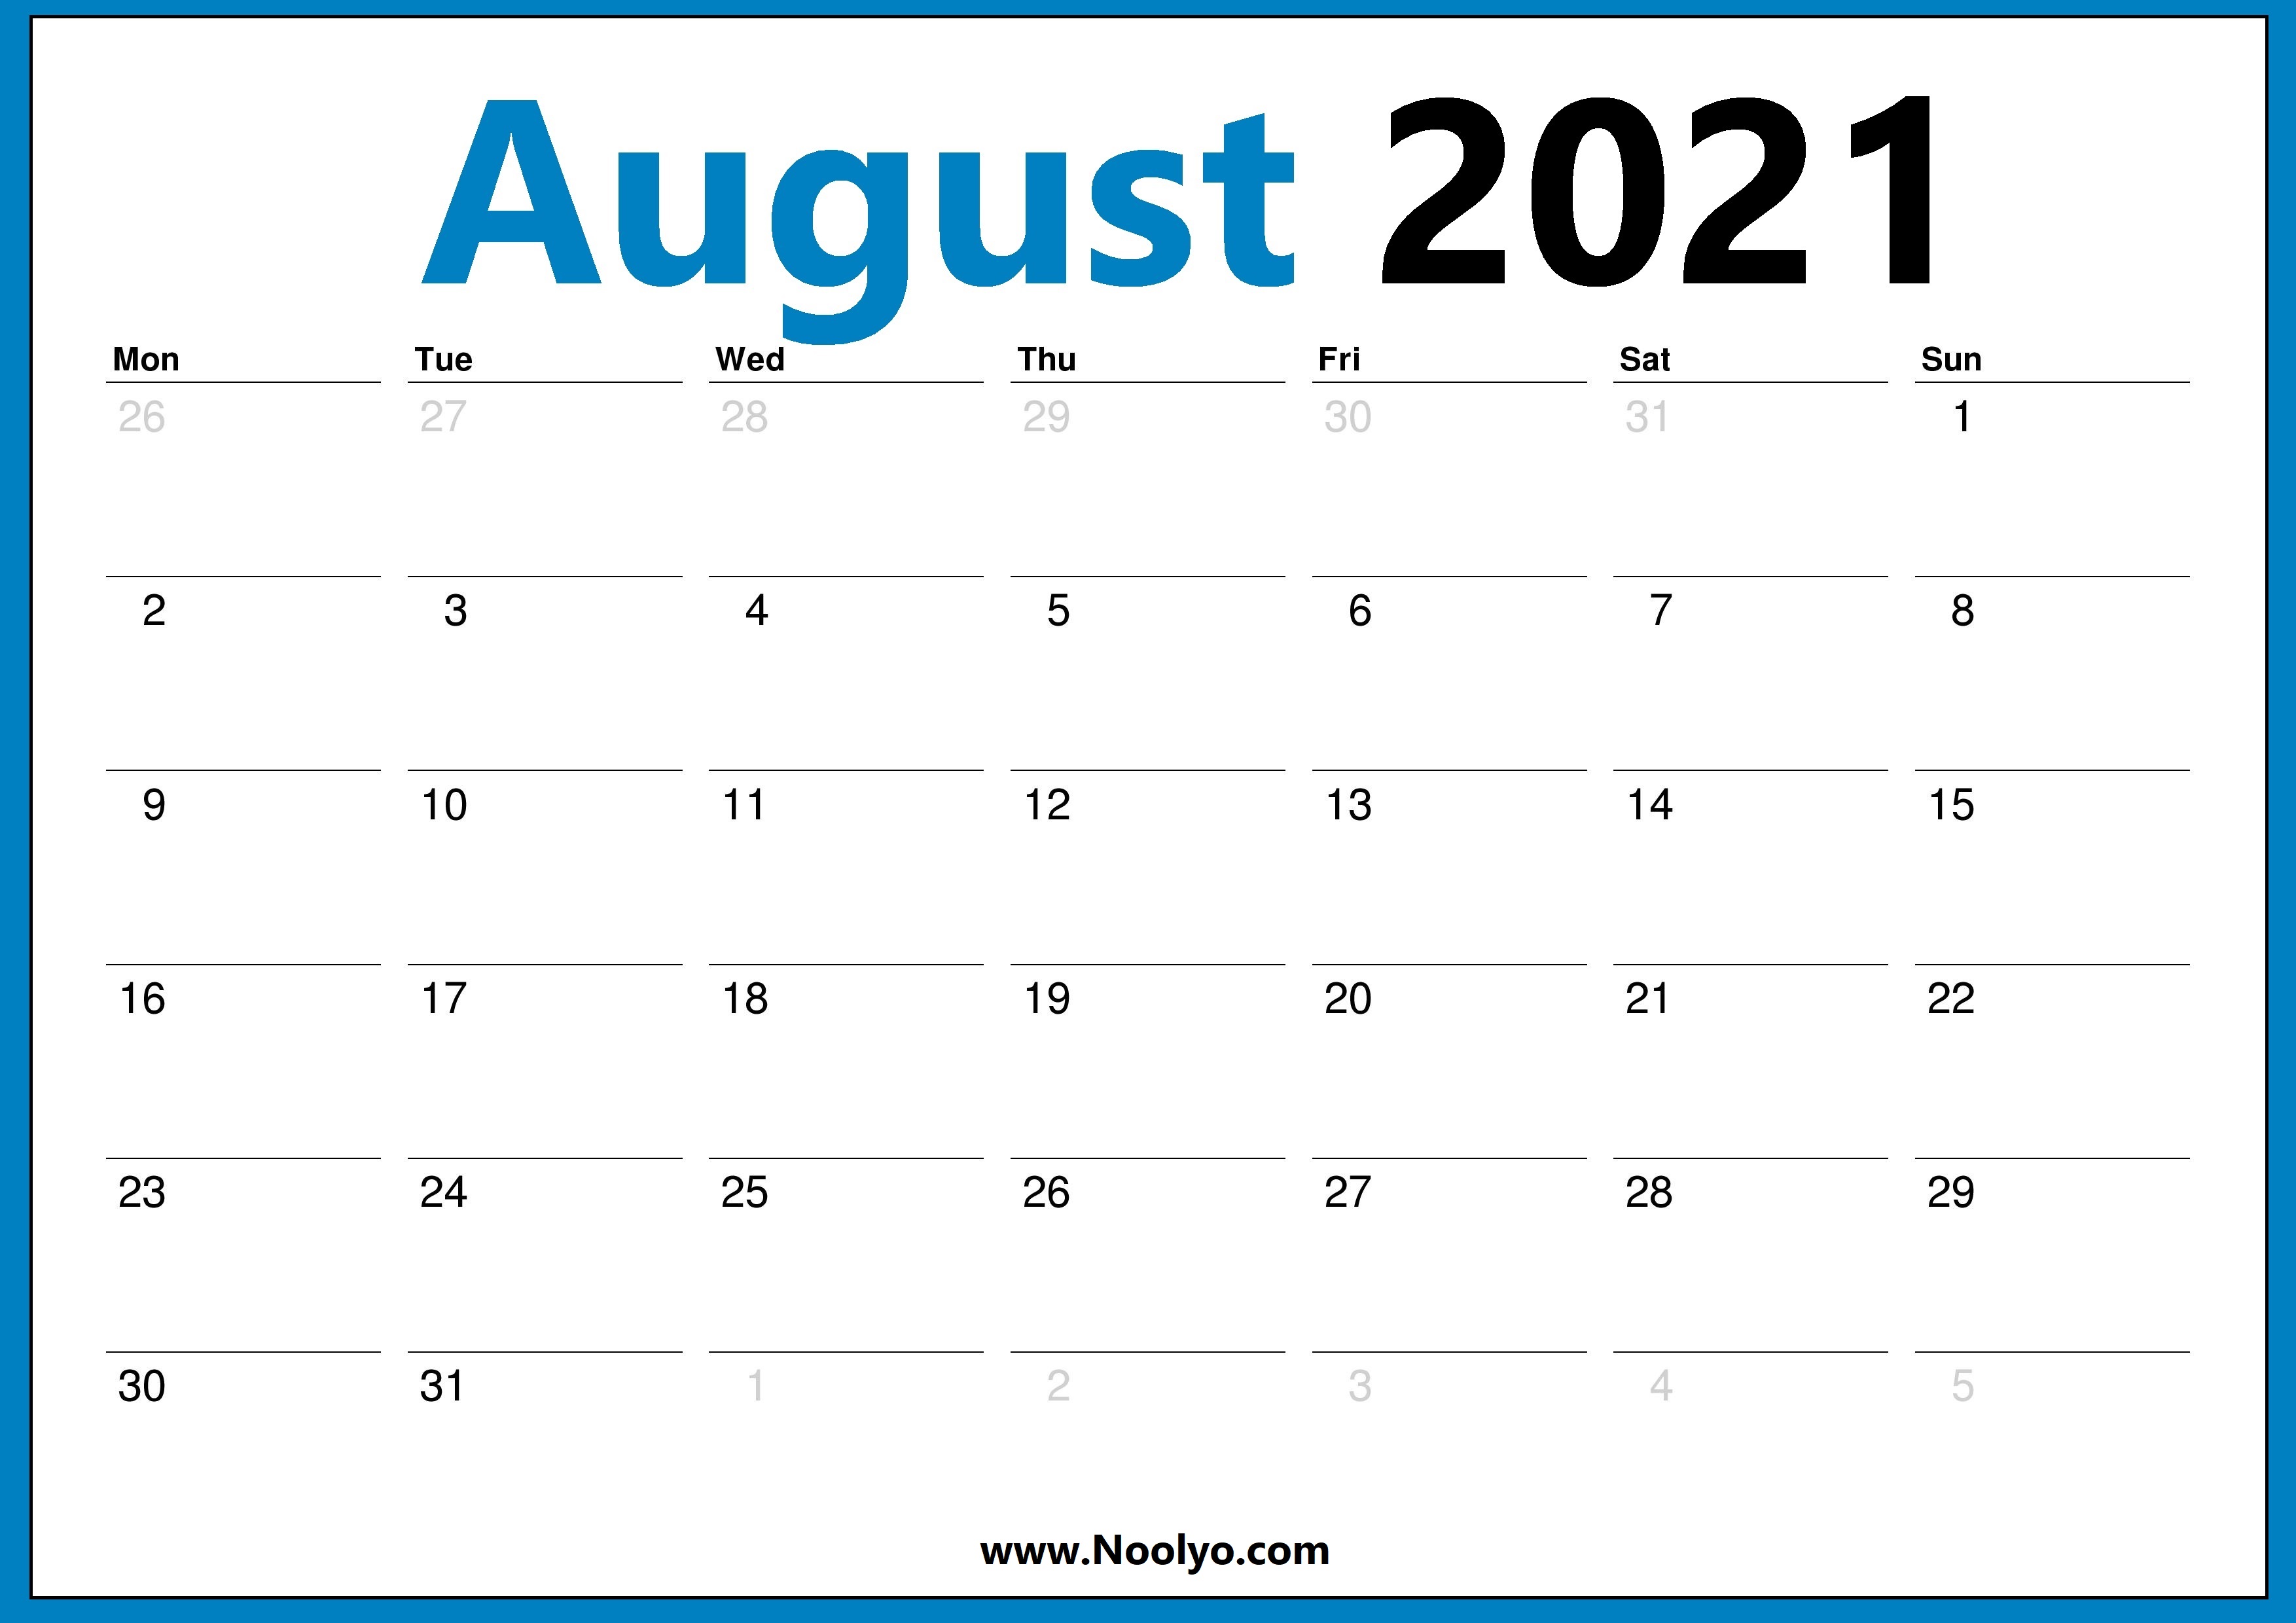 August 2021 Monday Start Calendar Printable - Noolyo.com